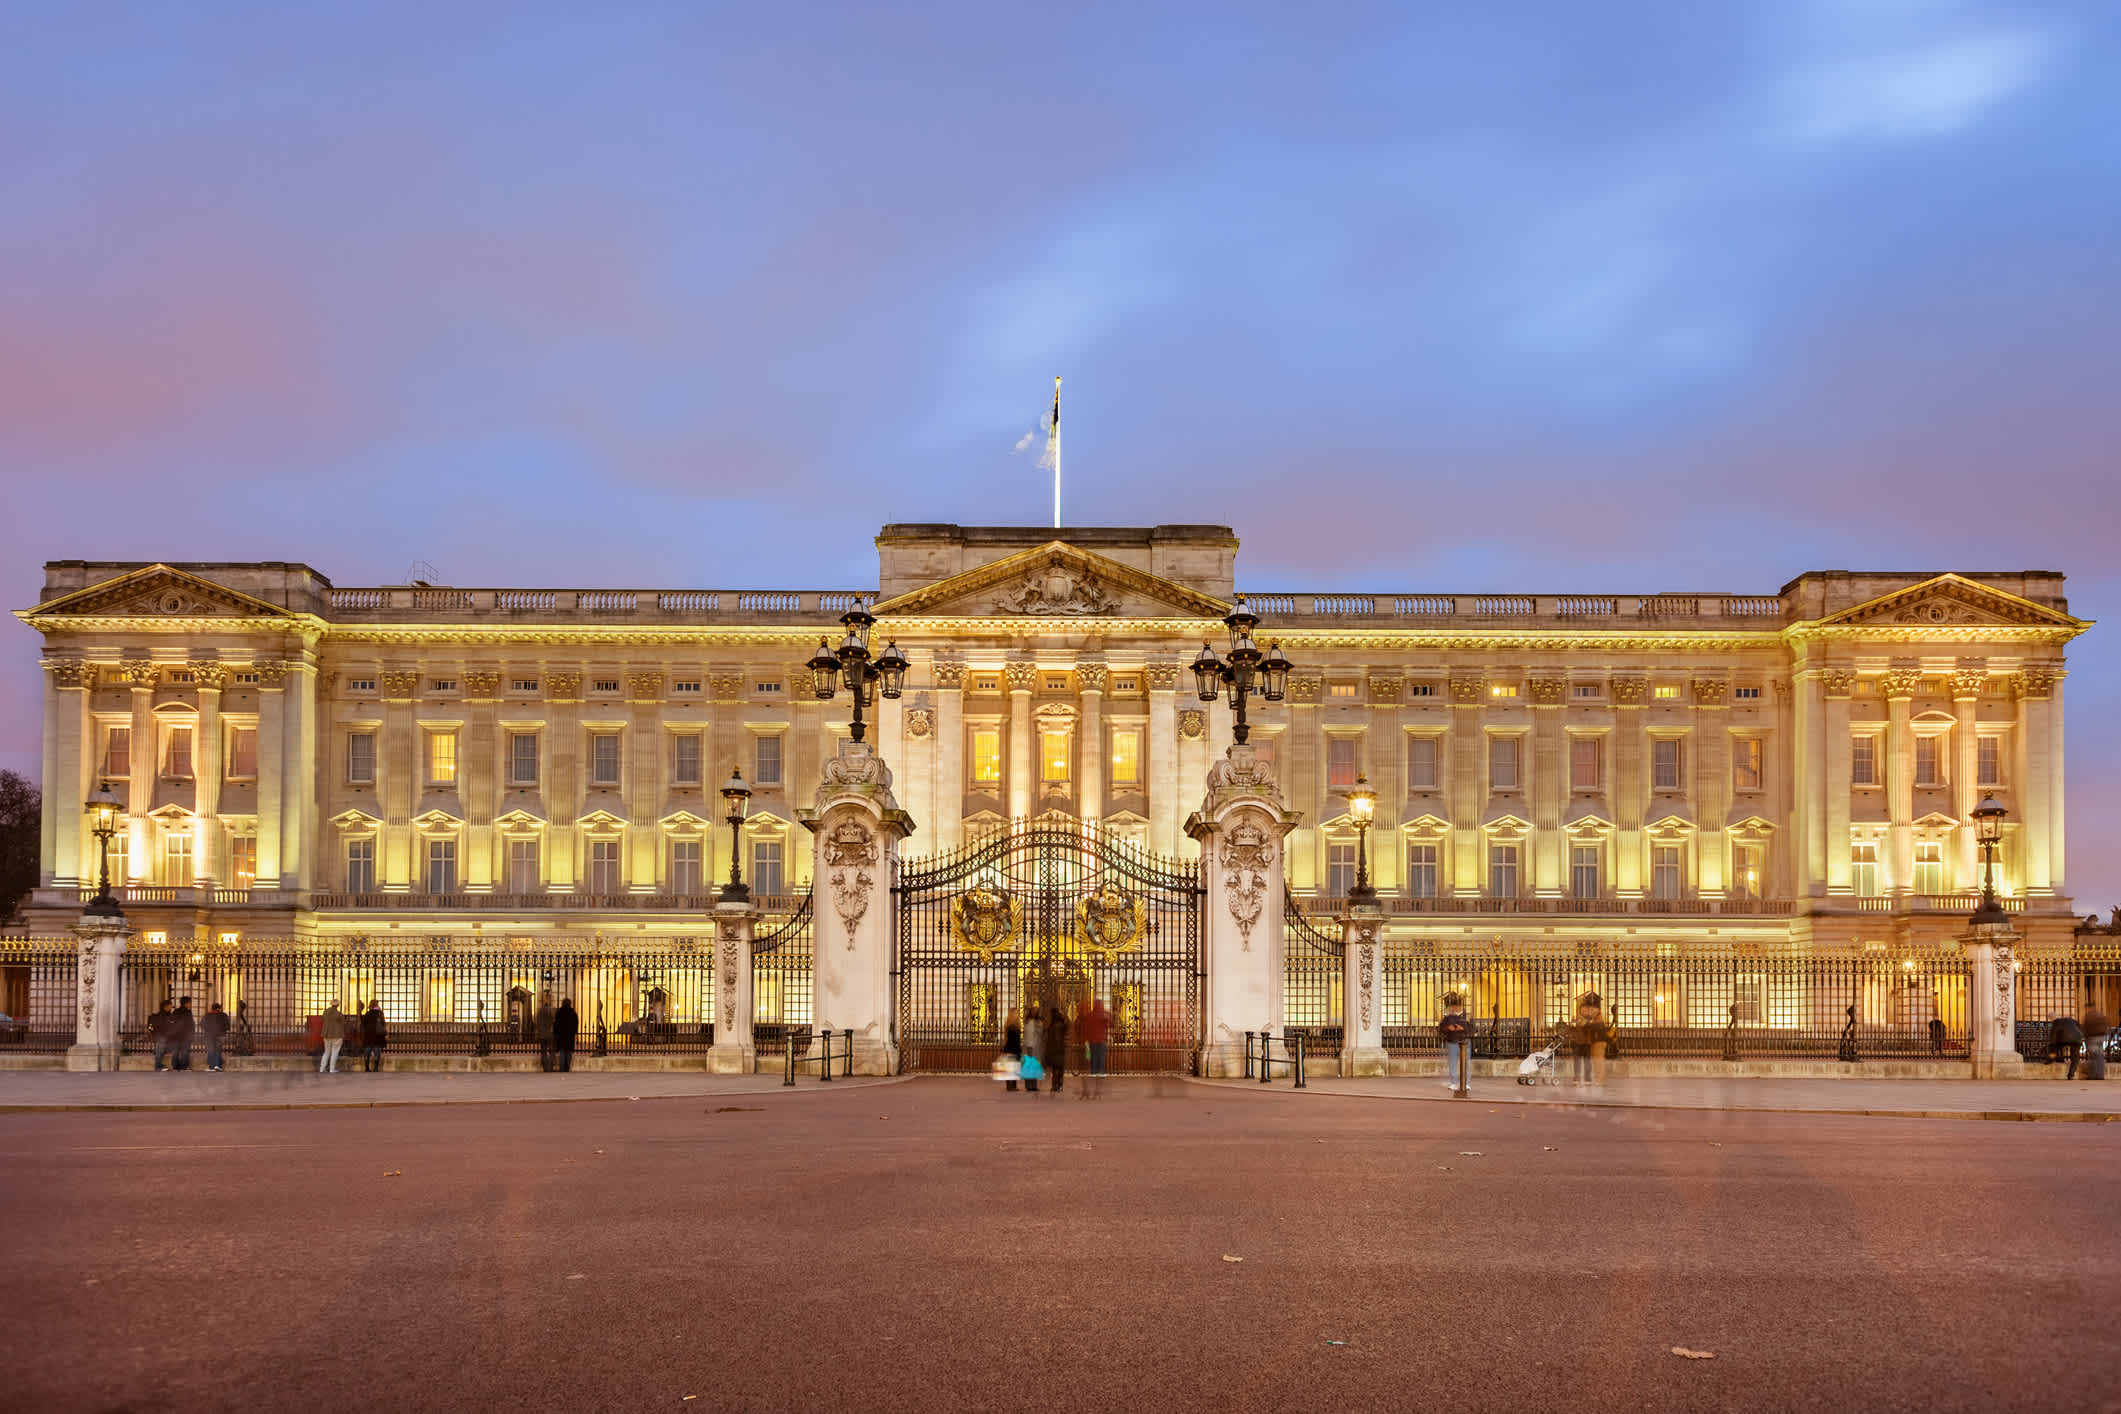 Buckingham Palace in London, England - ein Muss bei Ihrem London Urlaub